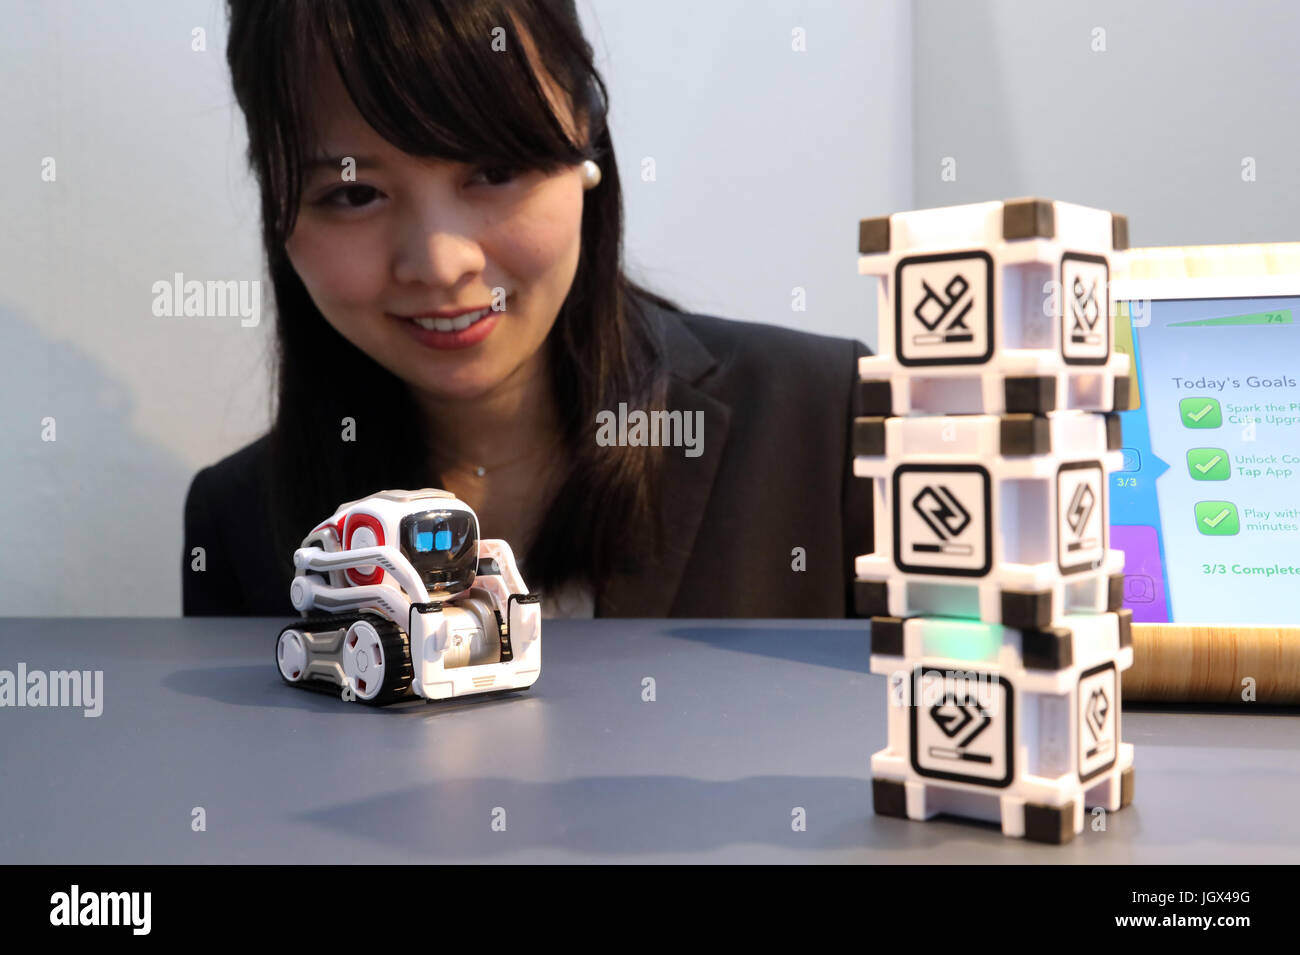 Cozmo robot toy Stock Photo - Alamy